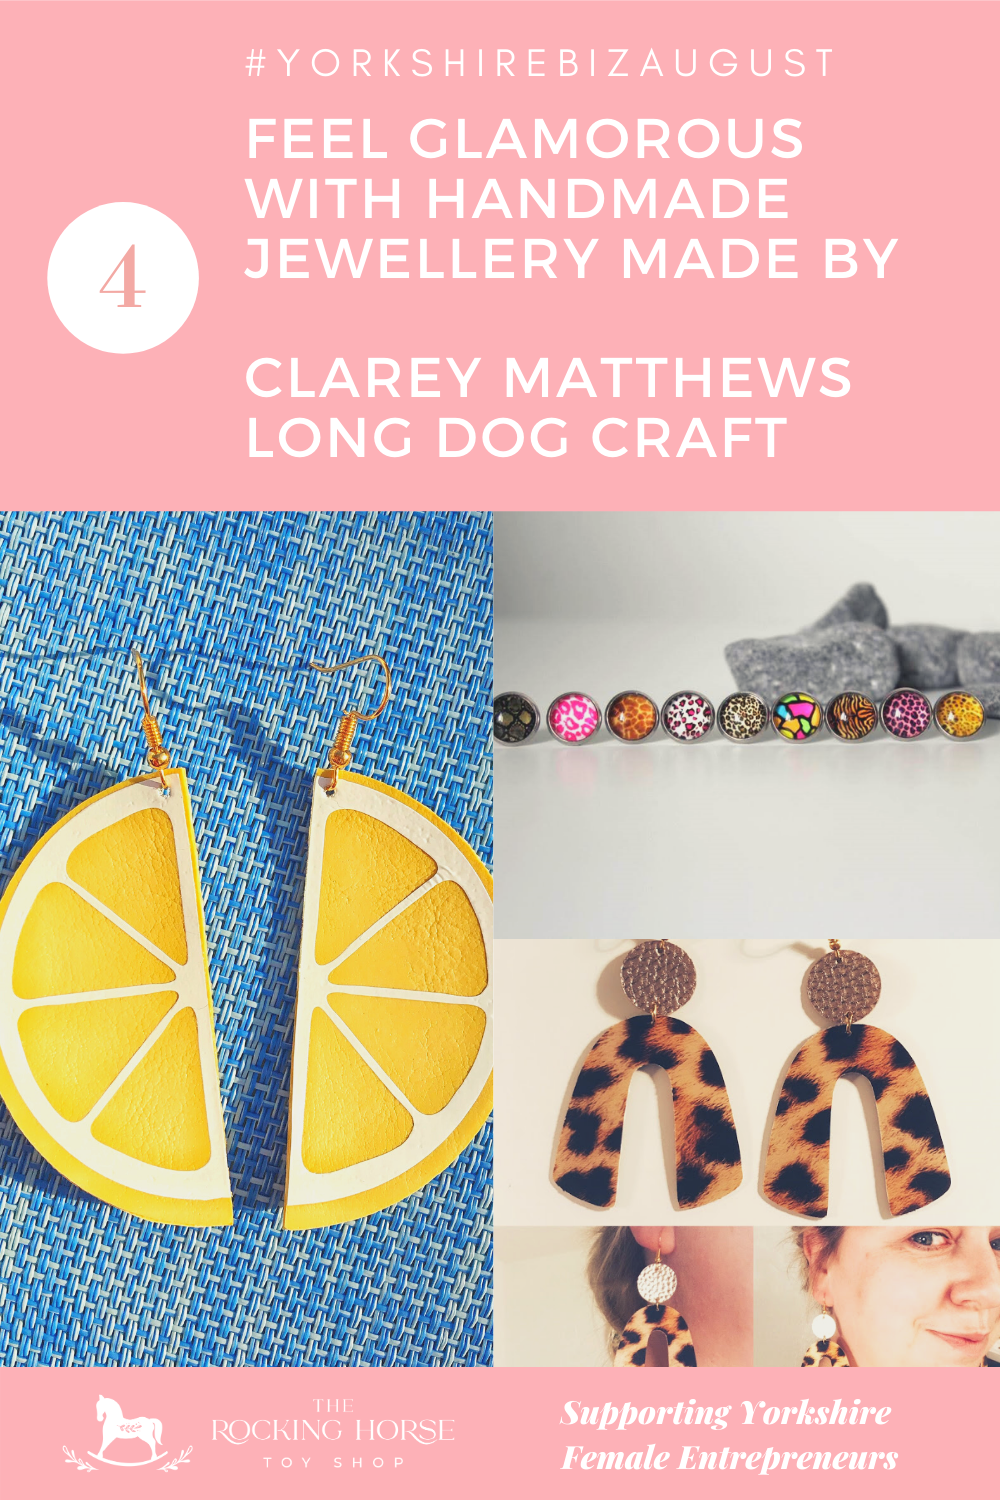 Long Dog Craft